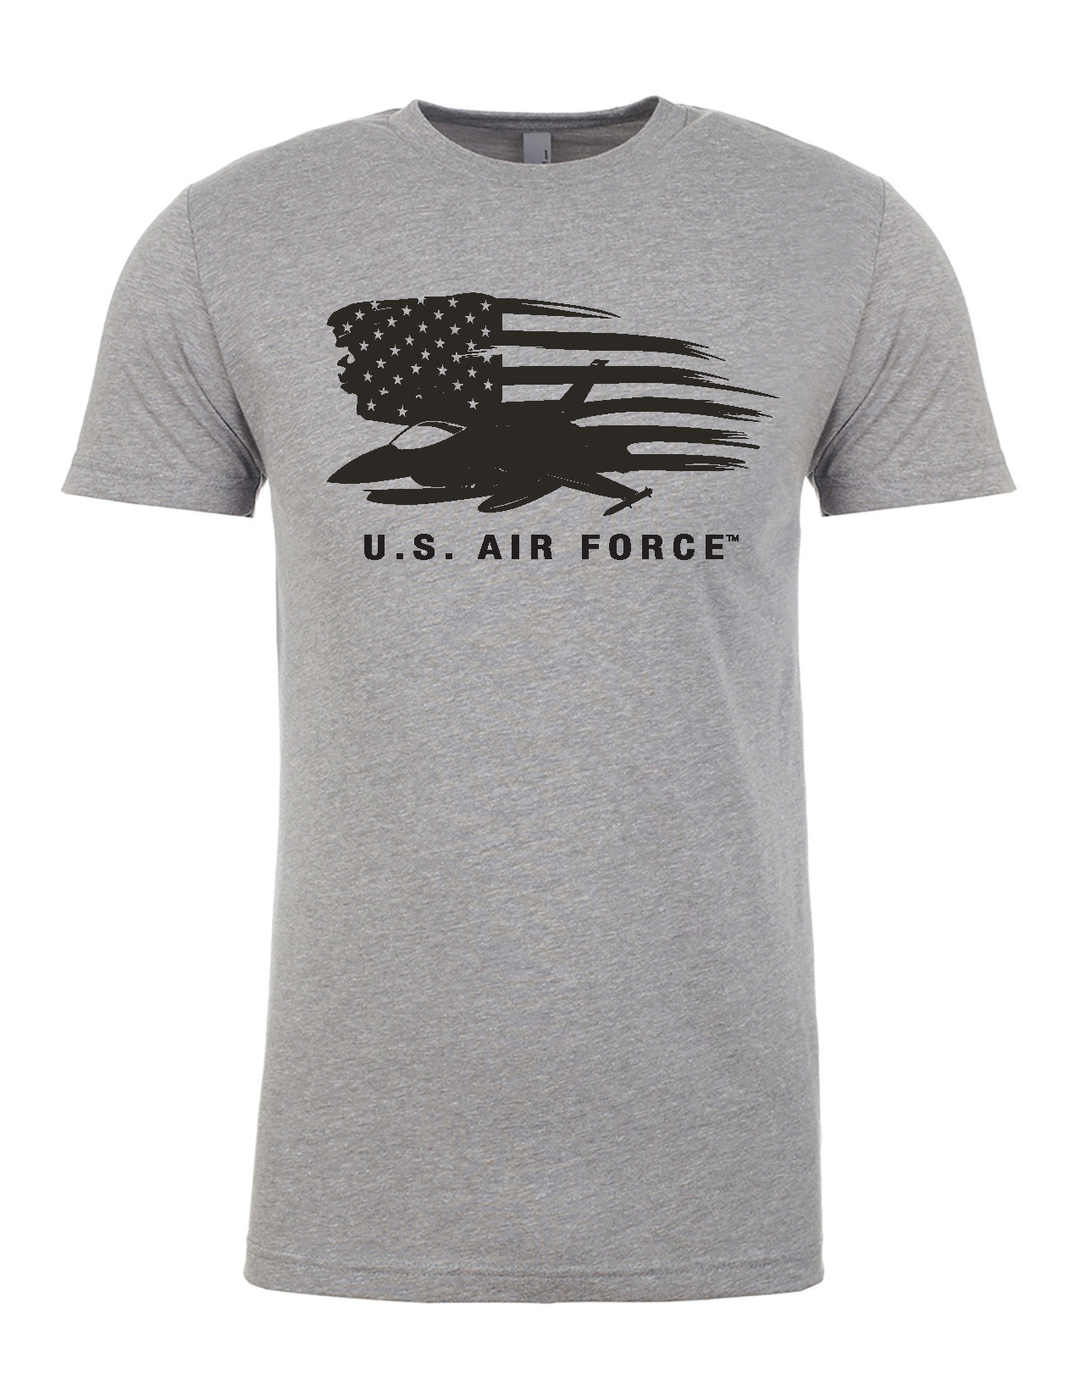 U.S. Air Force Jet Flag T-Shirt (Grey)